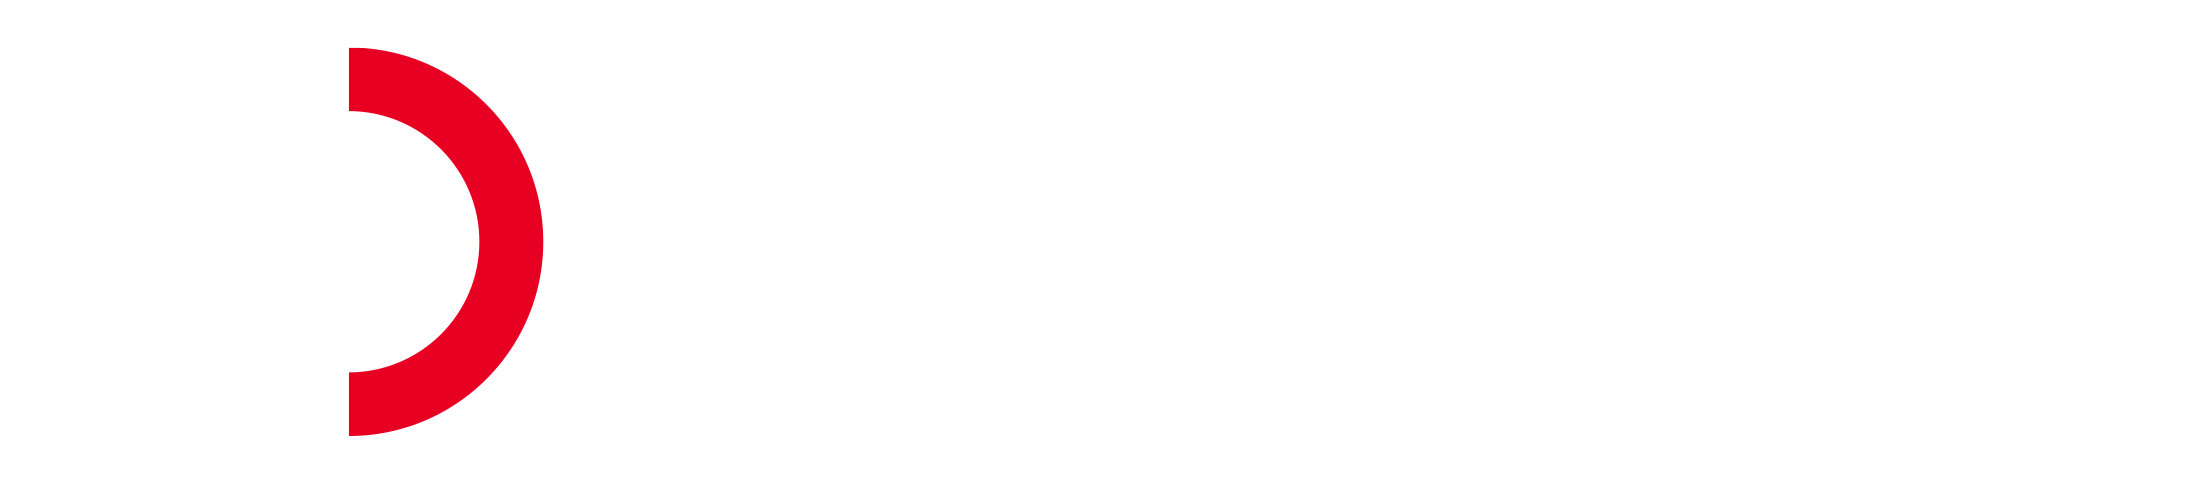 OpexNews